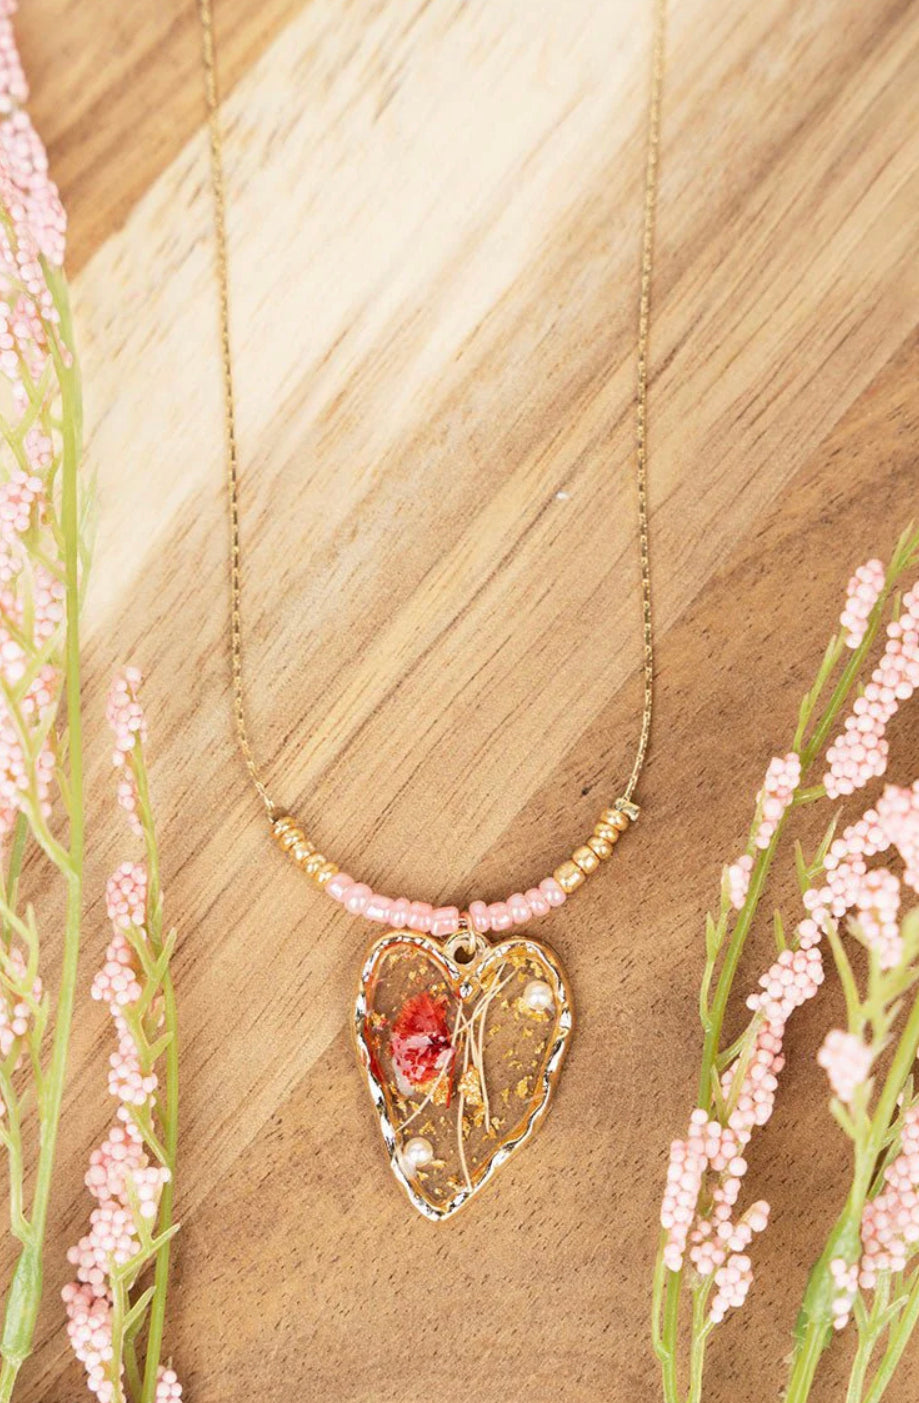 Pressed flower necklace